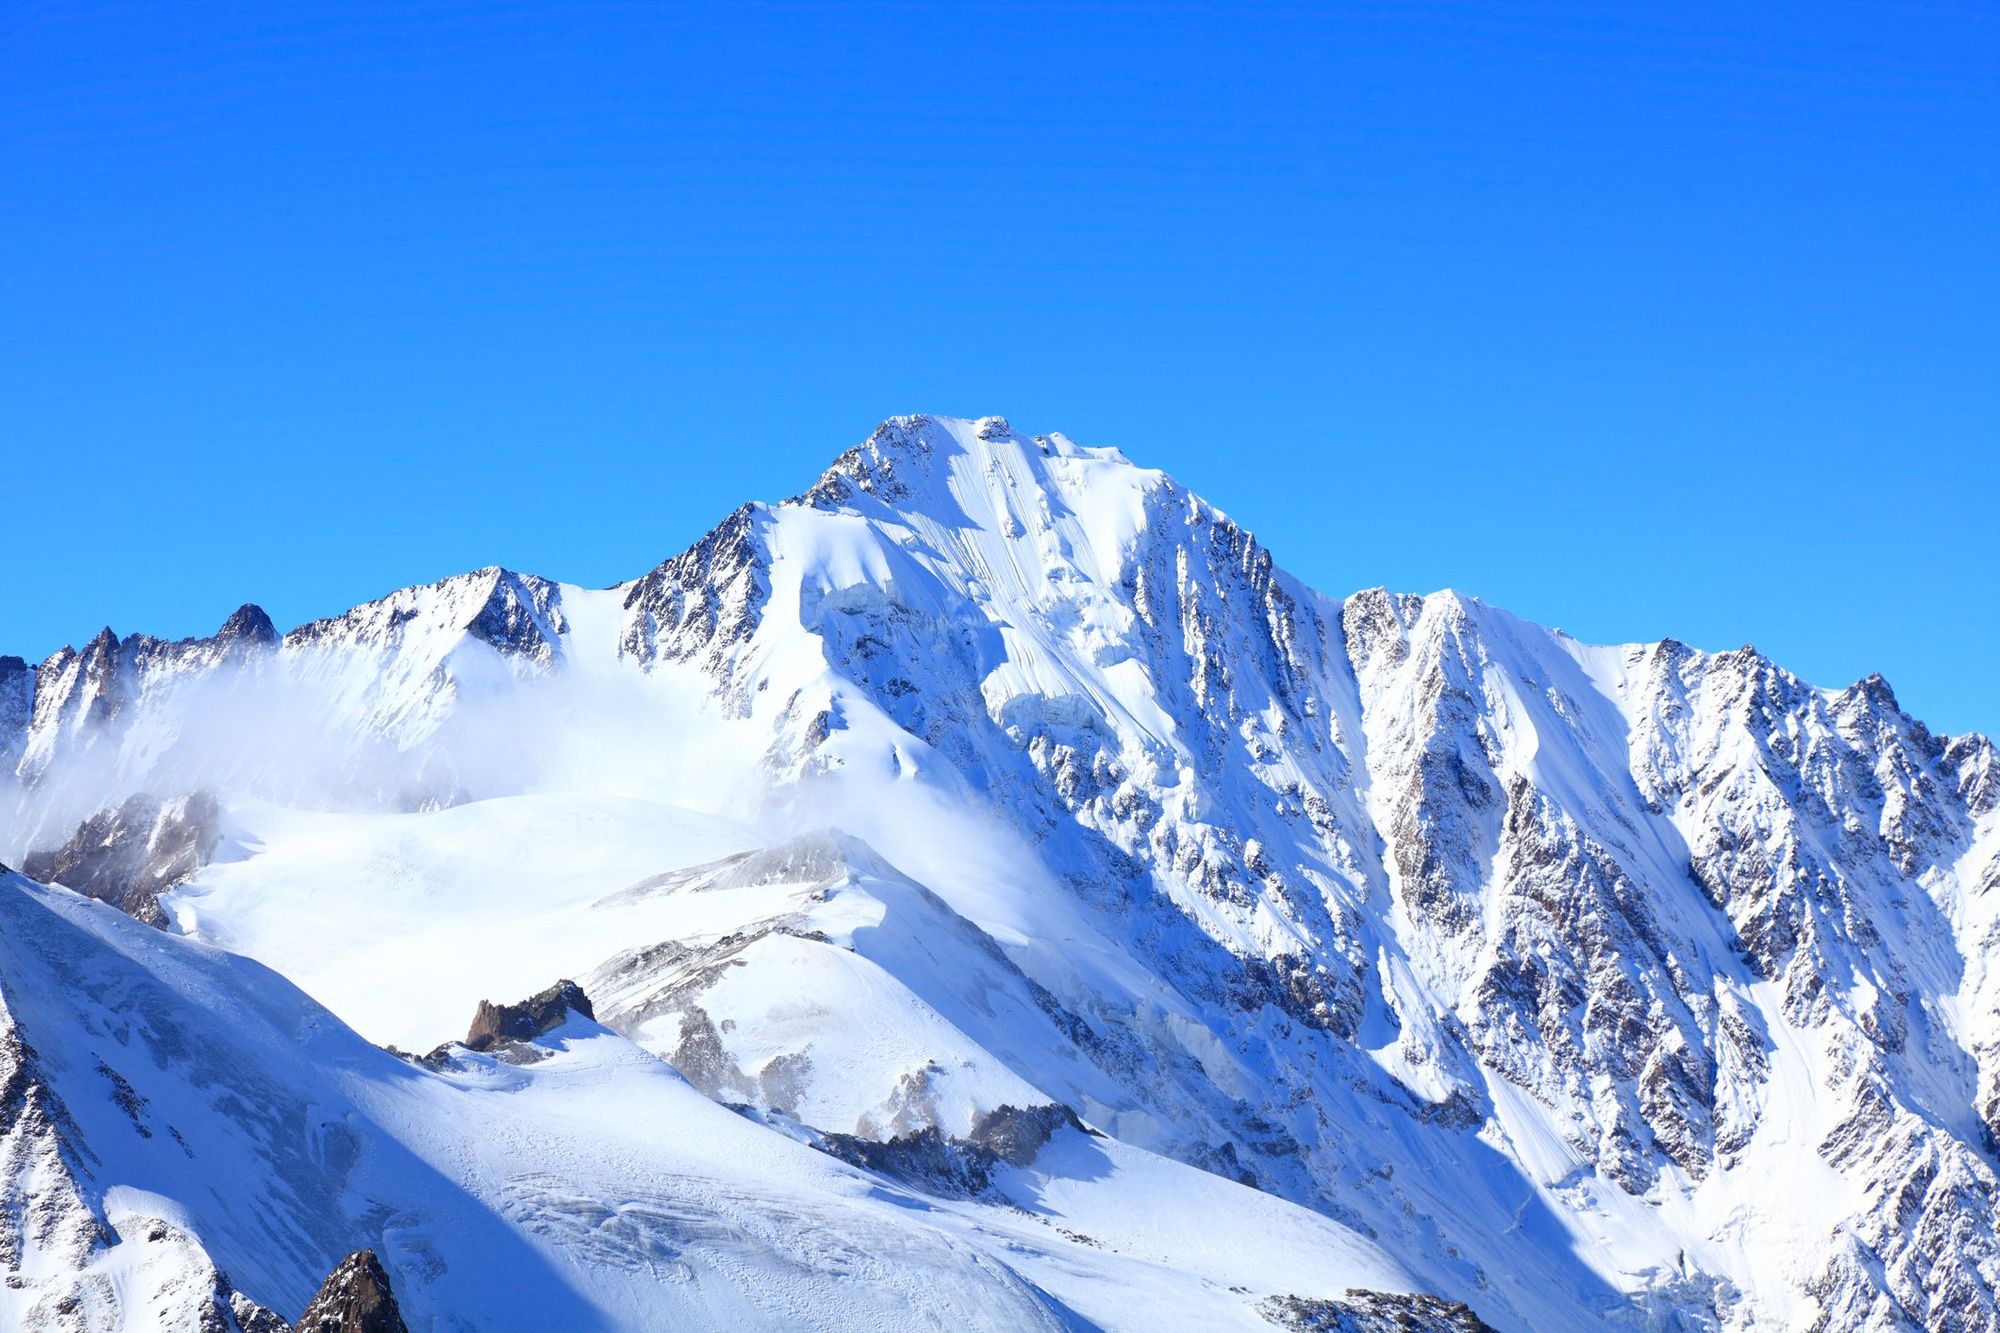 Mount Dzhimara (also known as Jimara) in Caucasus Mountain Range, Russia.